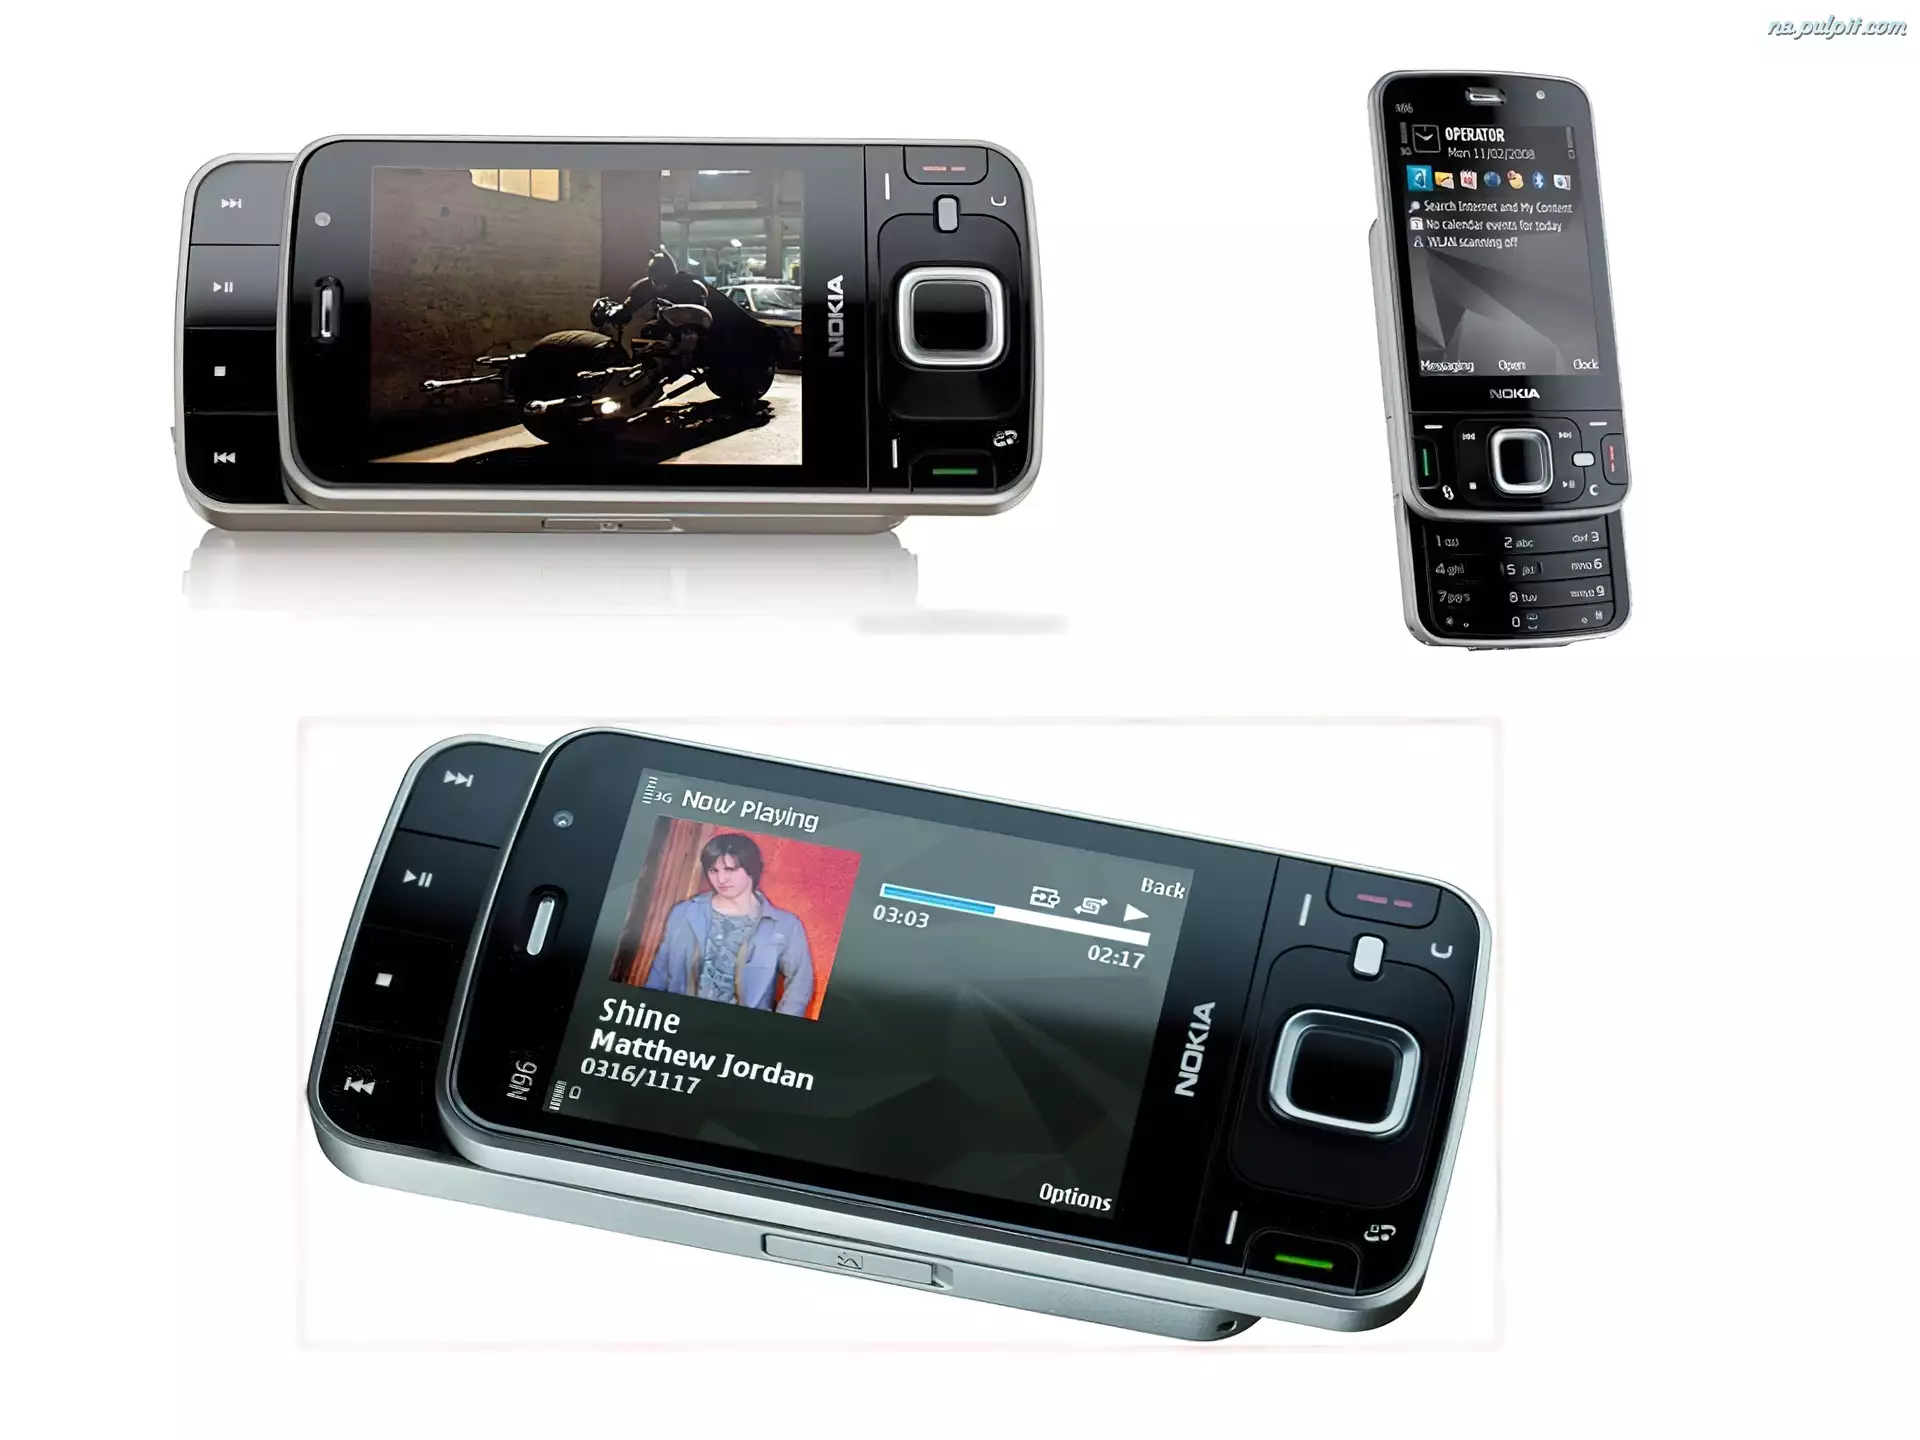 Nokia N96, WLAN, Batman, Shine